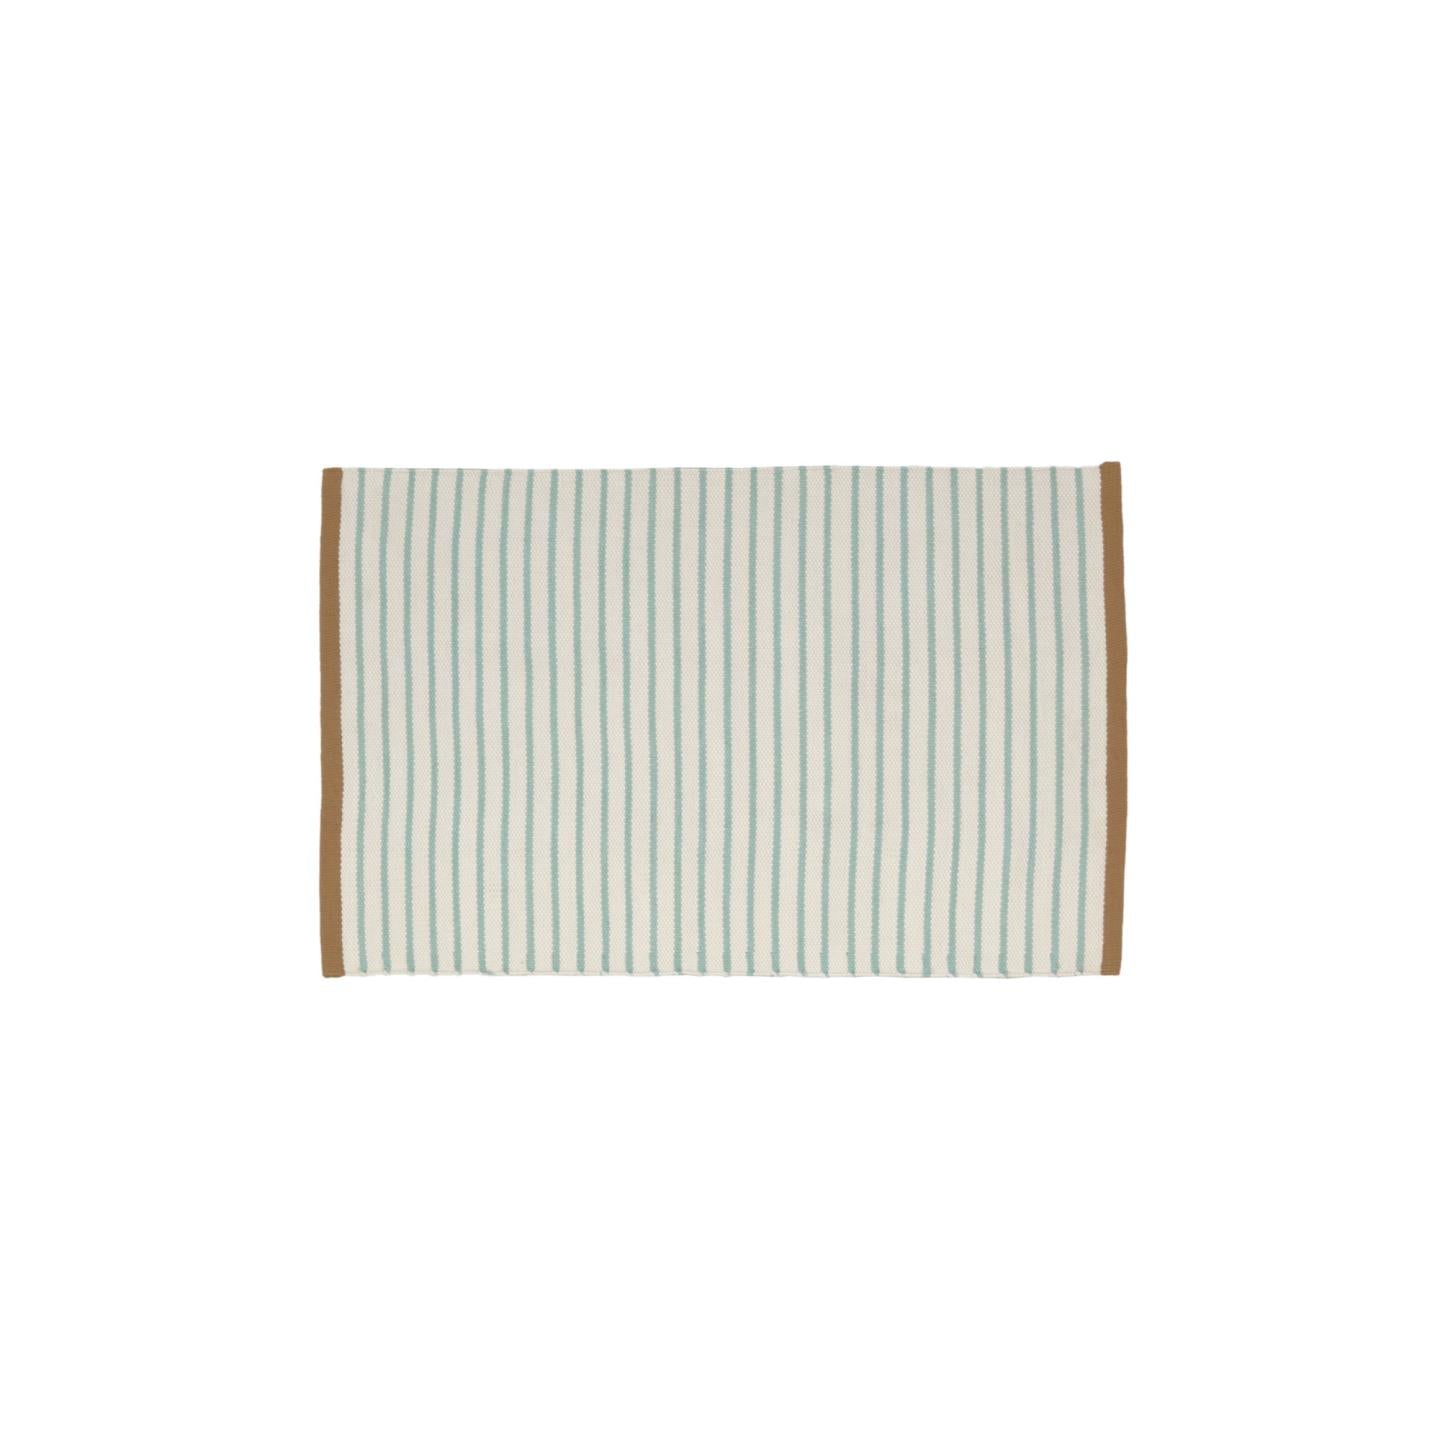 Catiana PET green striped mat 60 x 90 cm